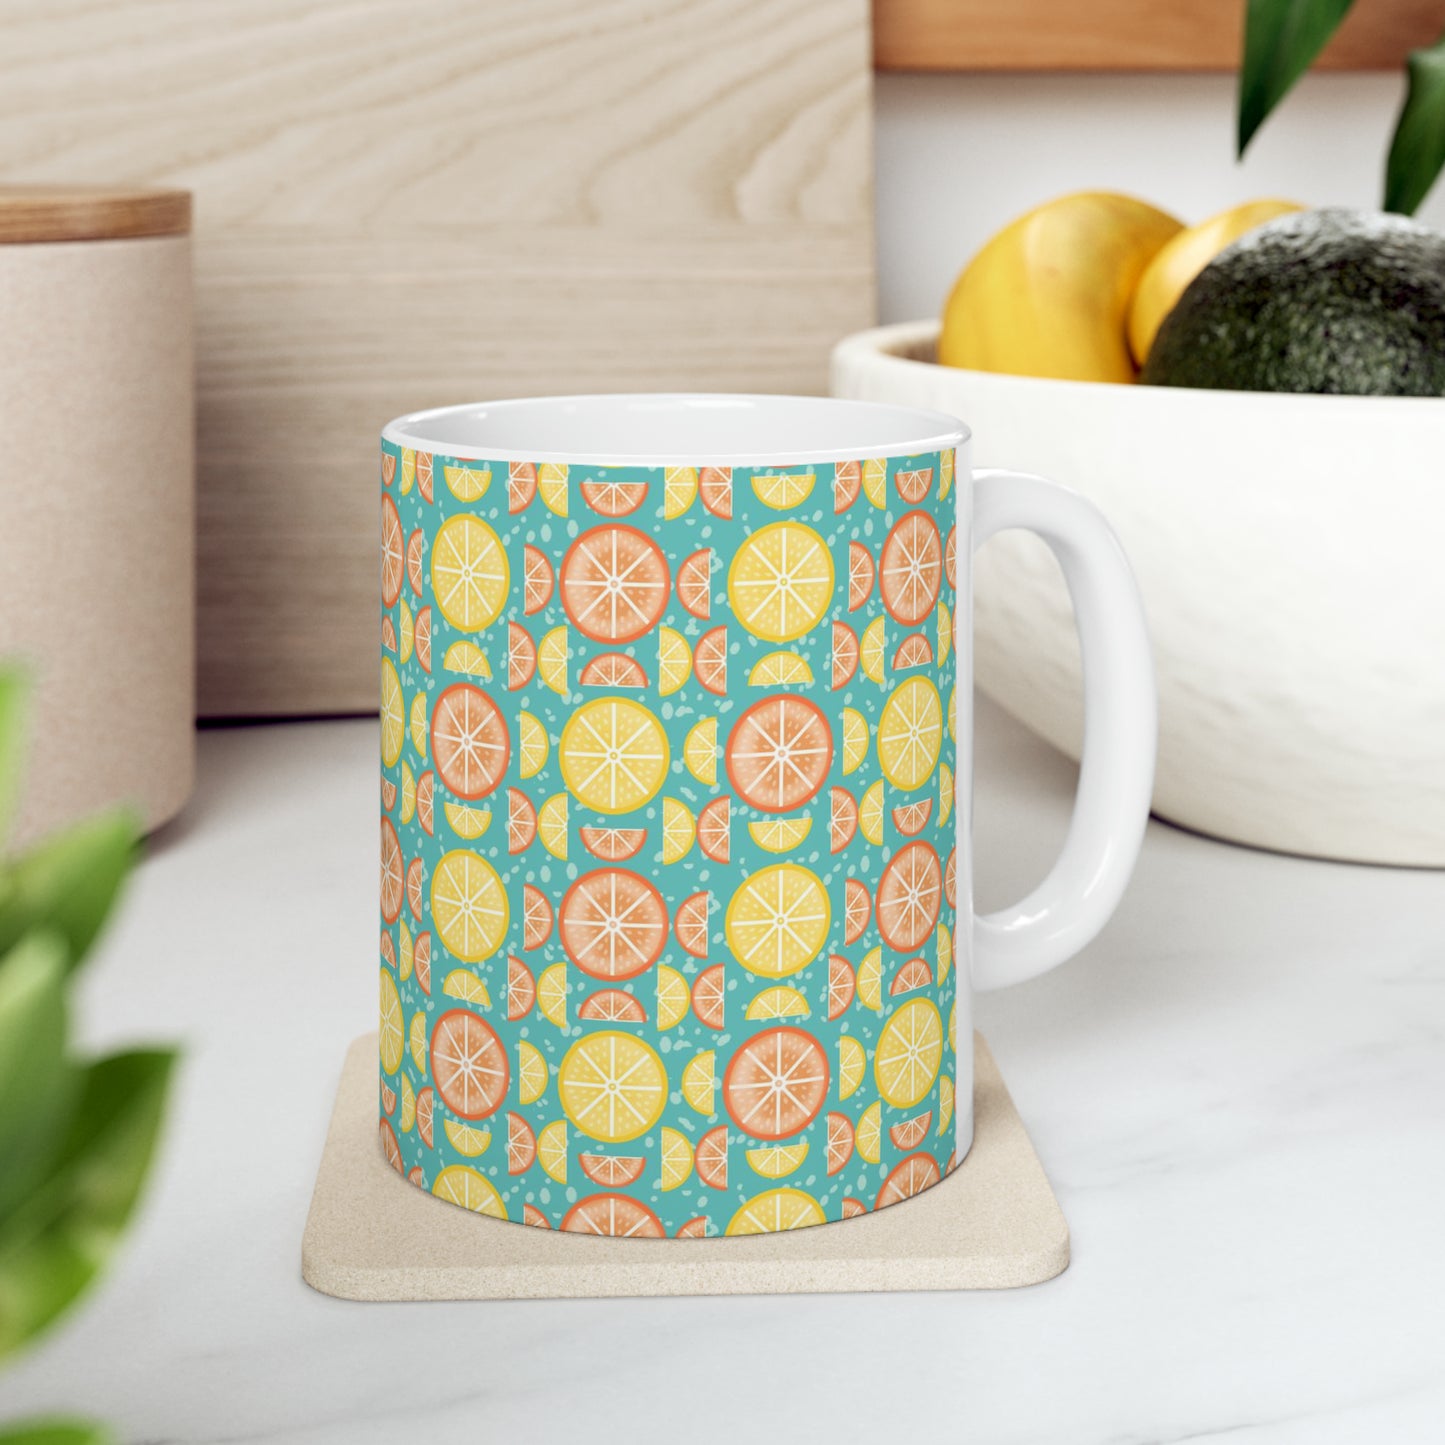 Citrus Slices Geometric Design Ceramic Mug - Vibrant Turquoise Background with Orange and Lemon Slices